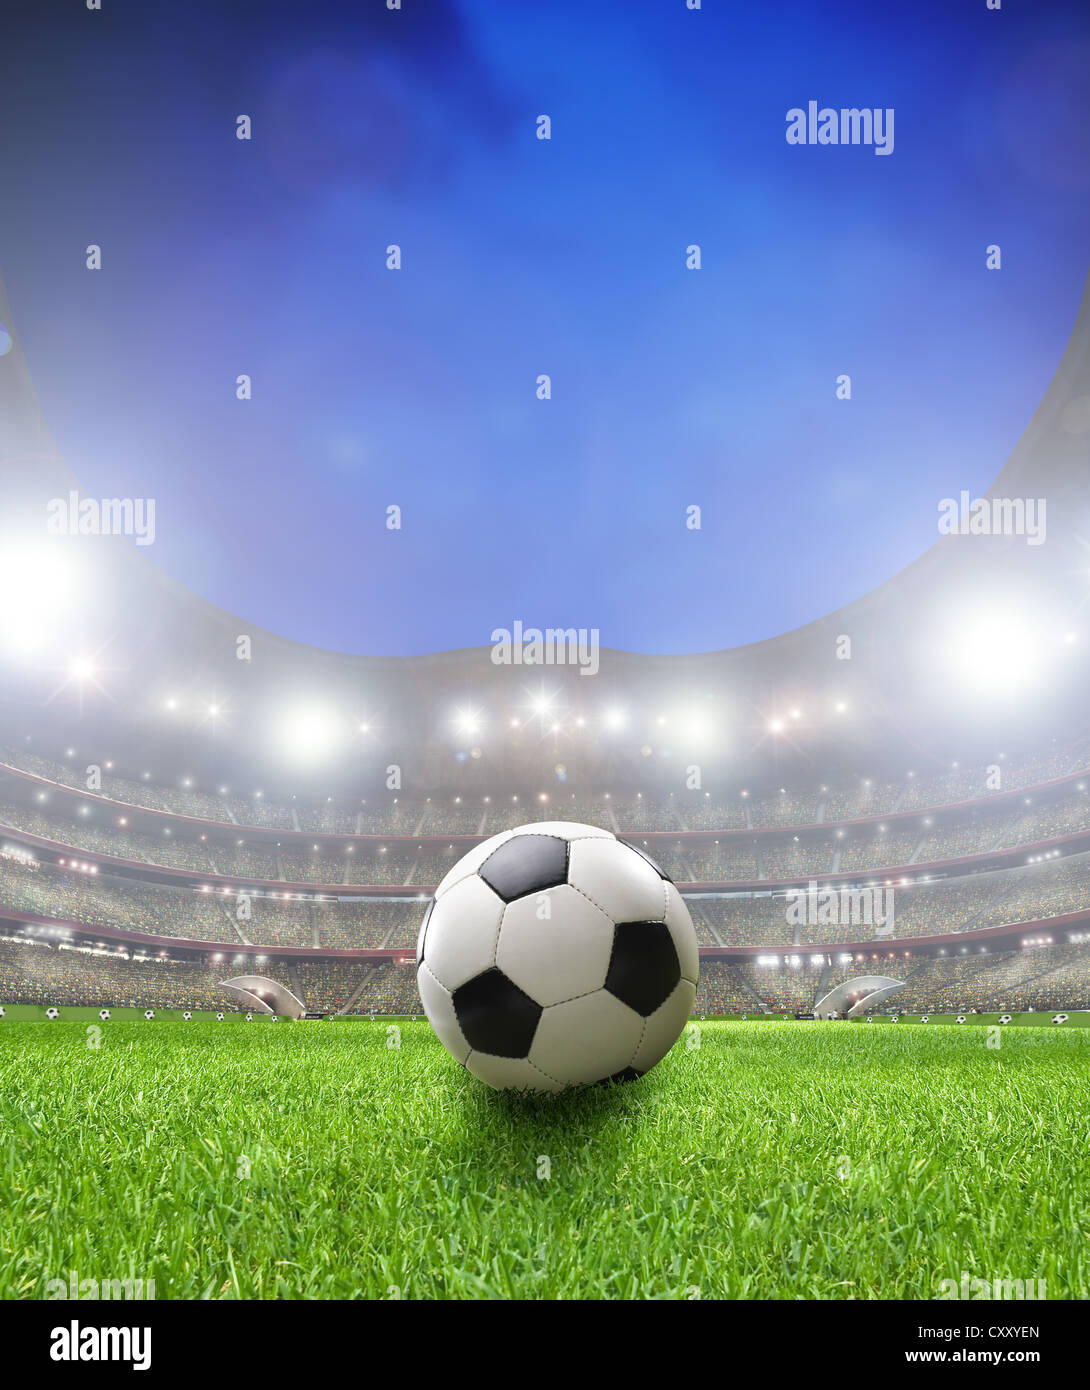 Football on the grass in an illuminated football stadium with spectator stands, illustration Stock Photo